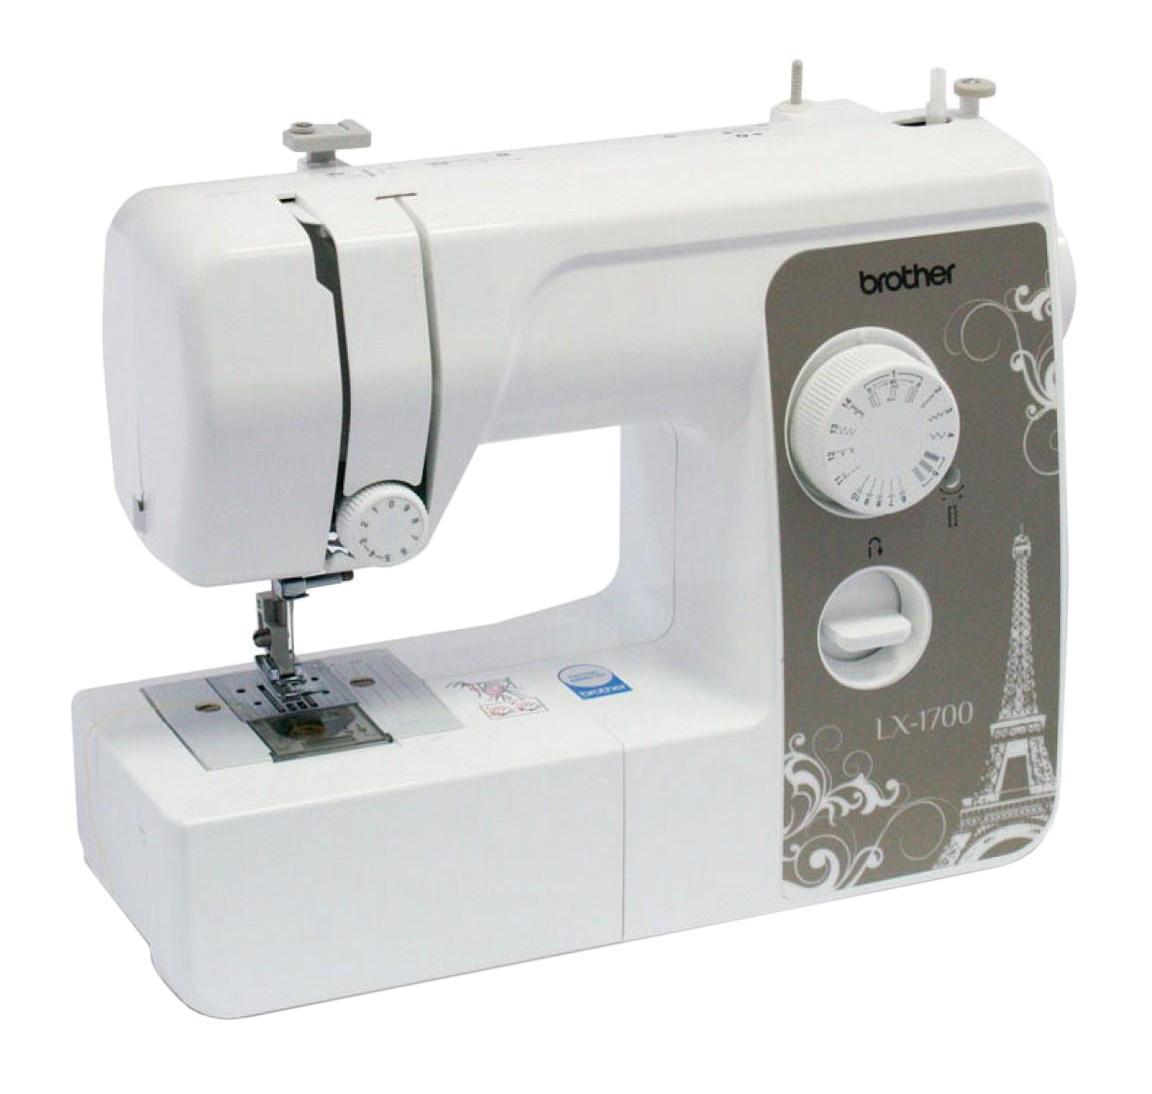 Brother LX-1700 швейная машина